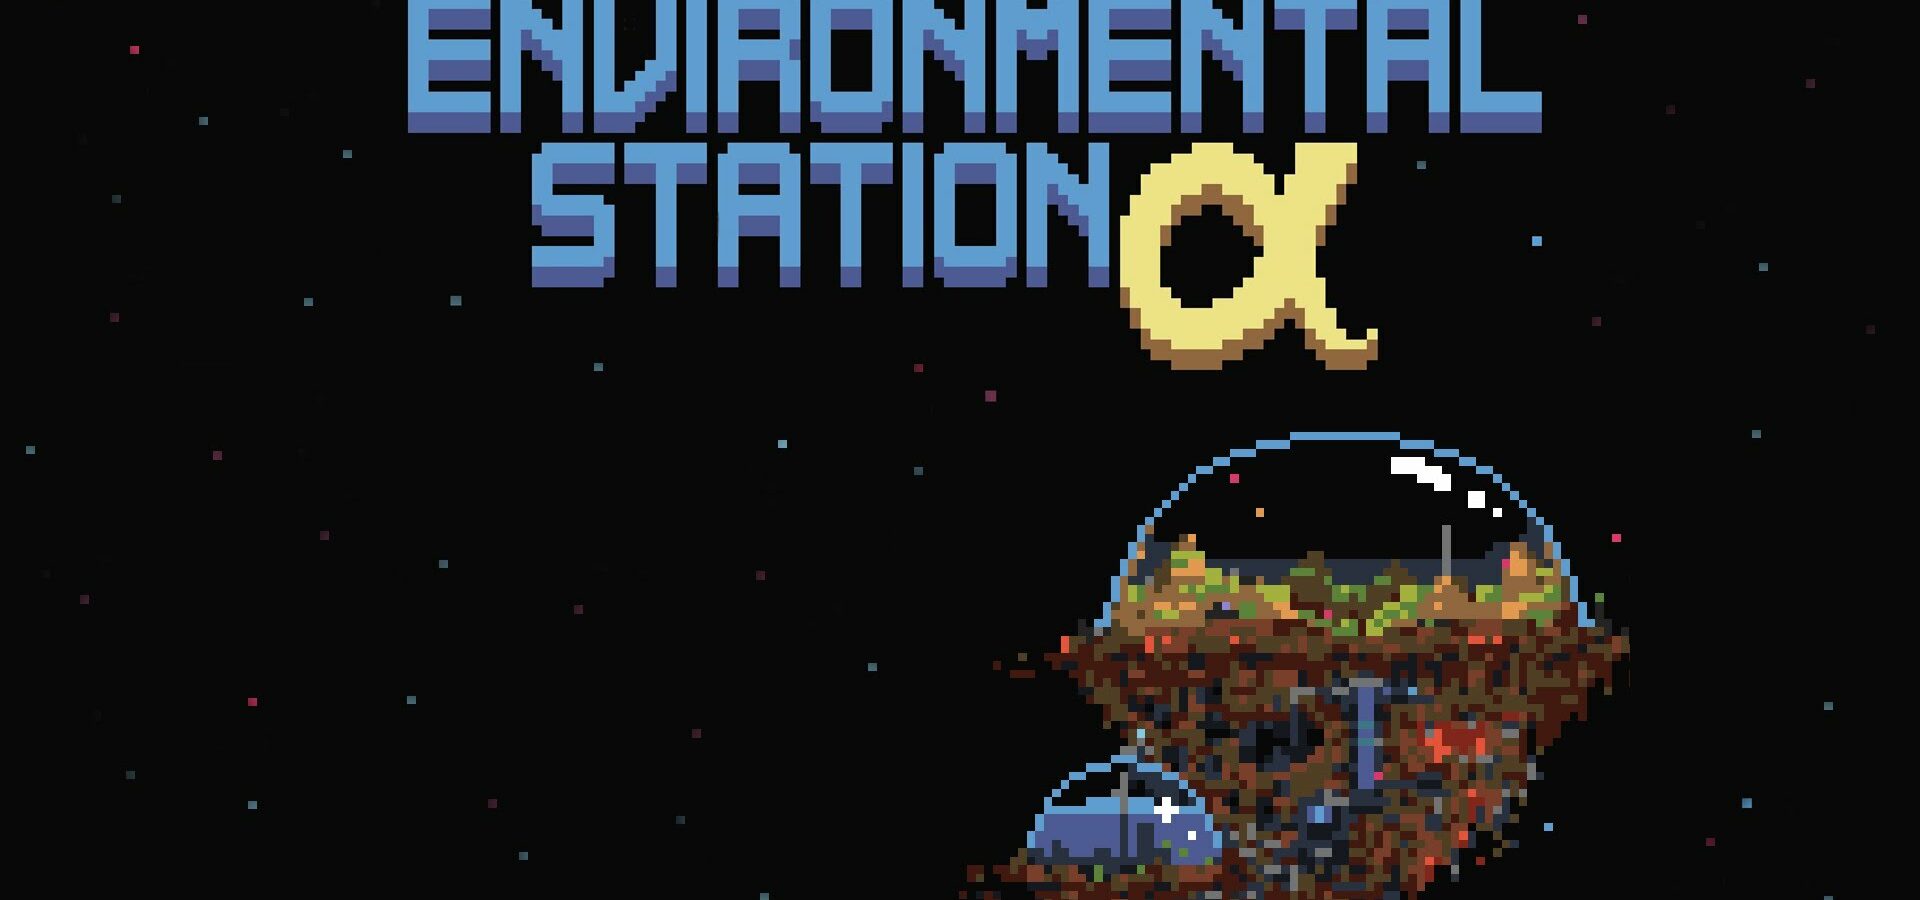 Environmental Station Alpha